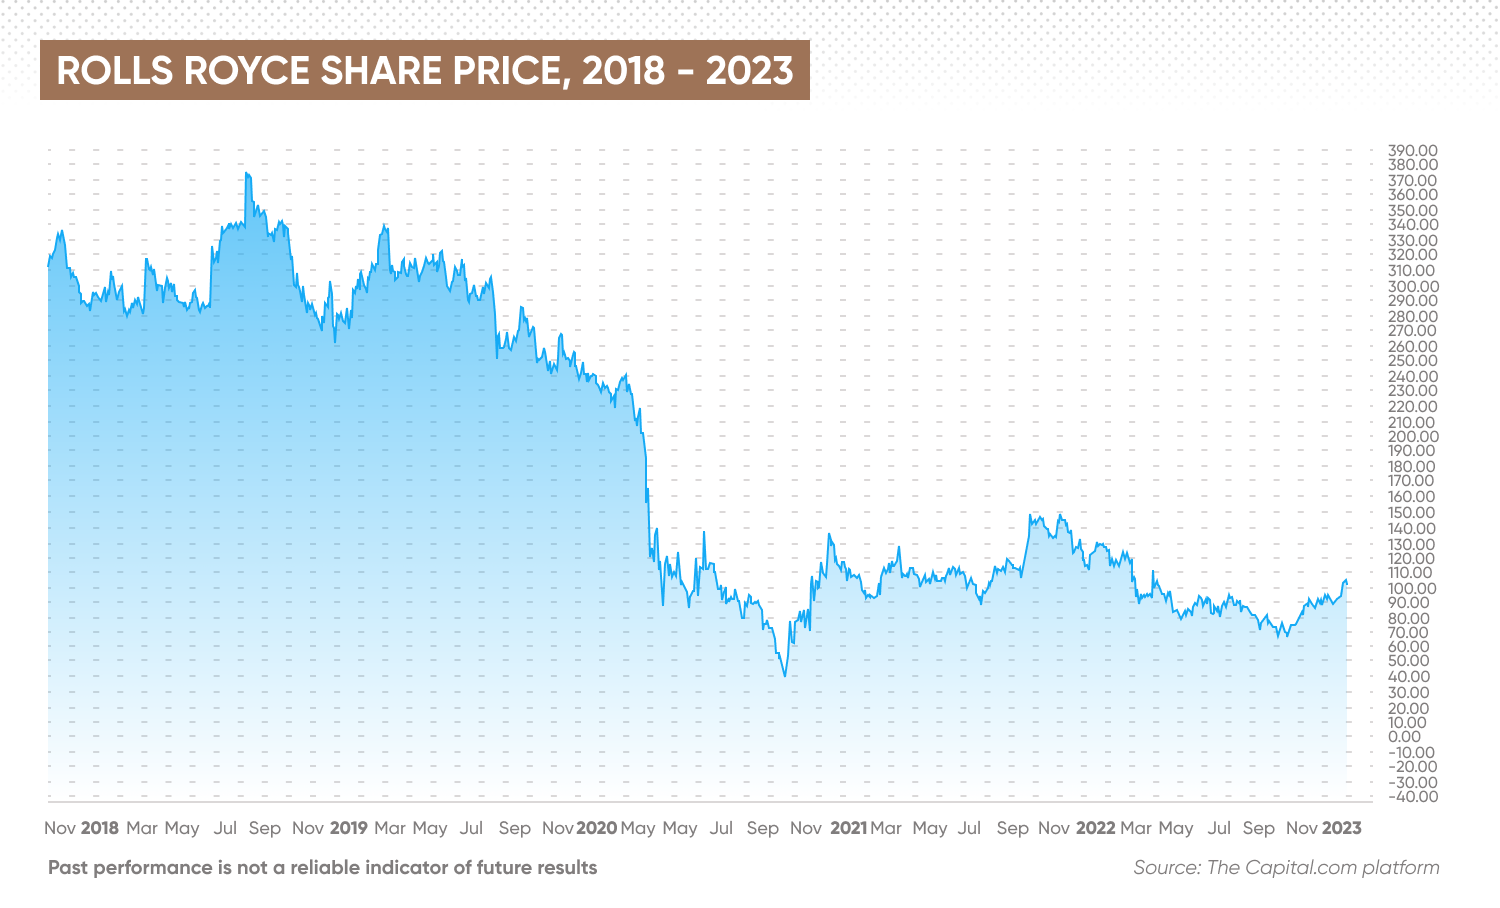 Rolls Royce share price, 2018 - 2023